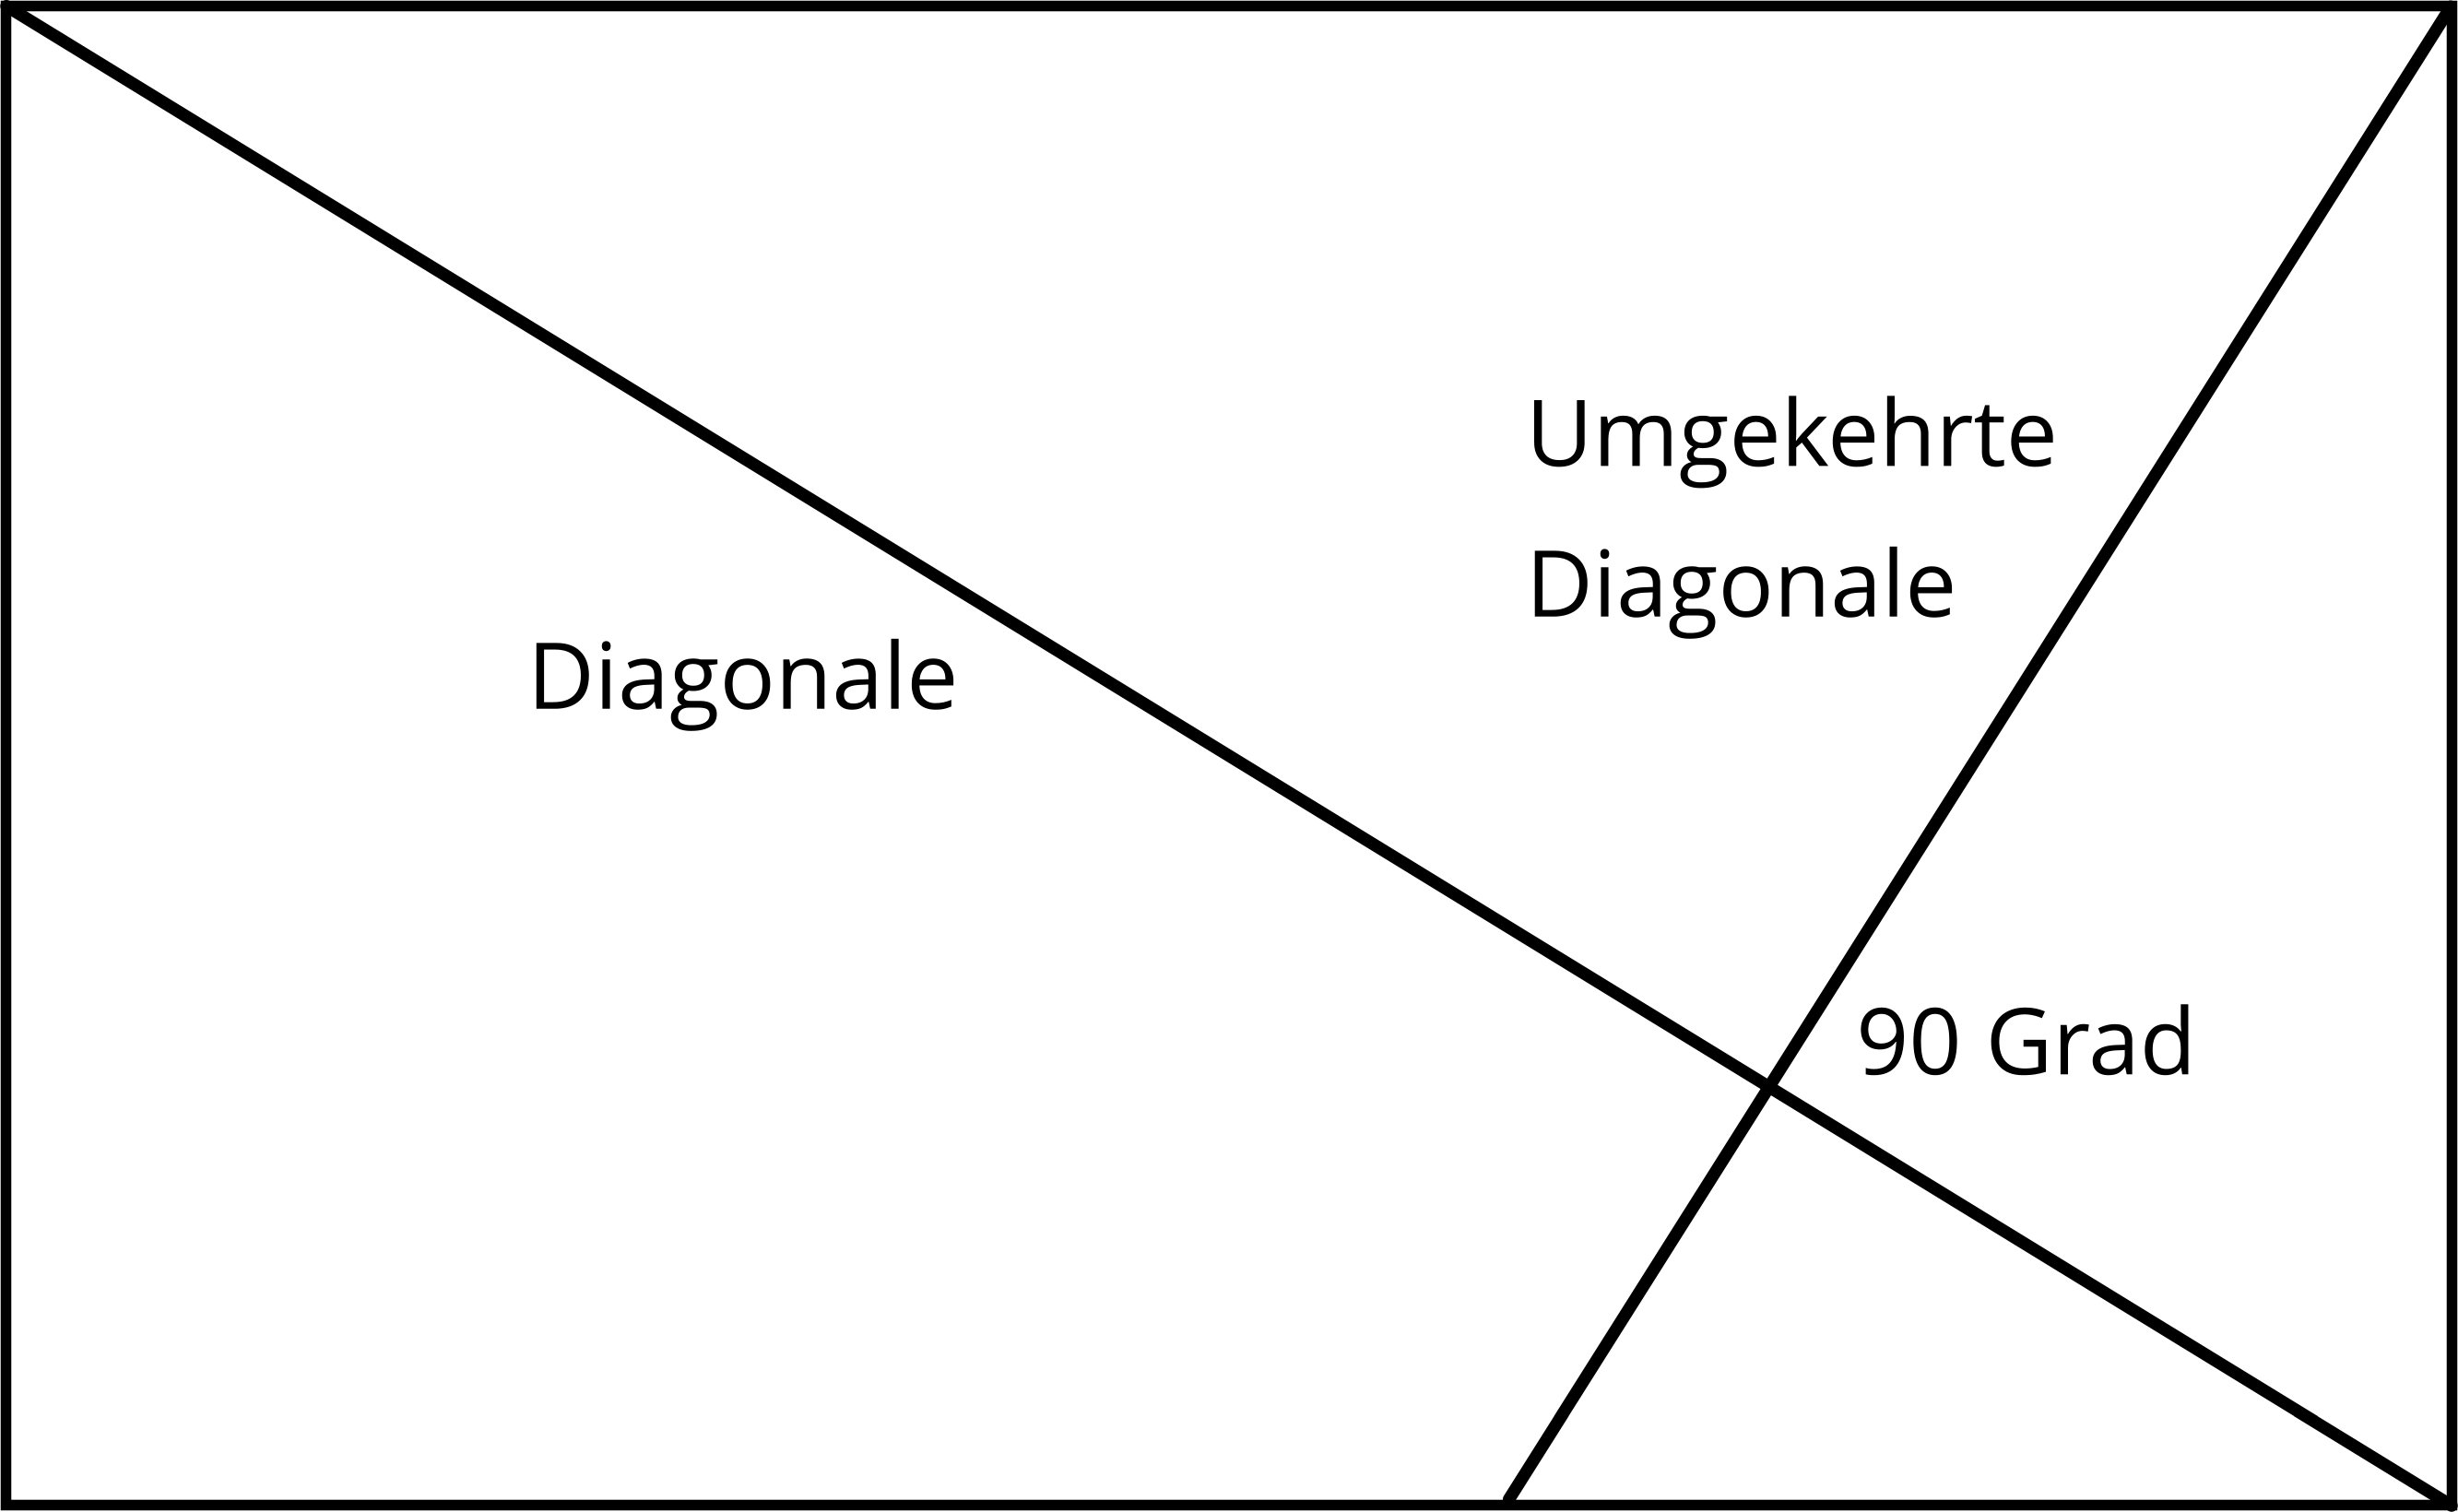 umgekehrte Diagonale.jpg